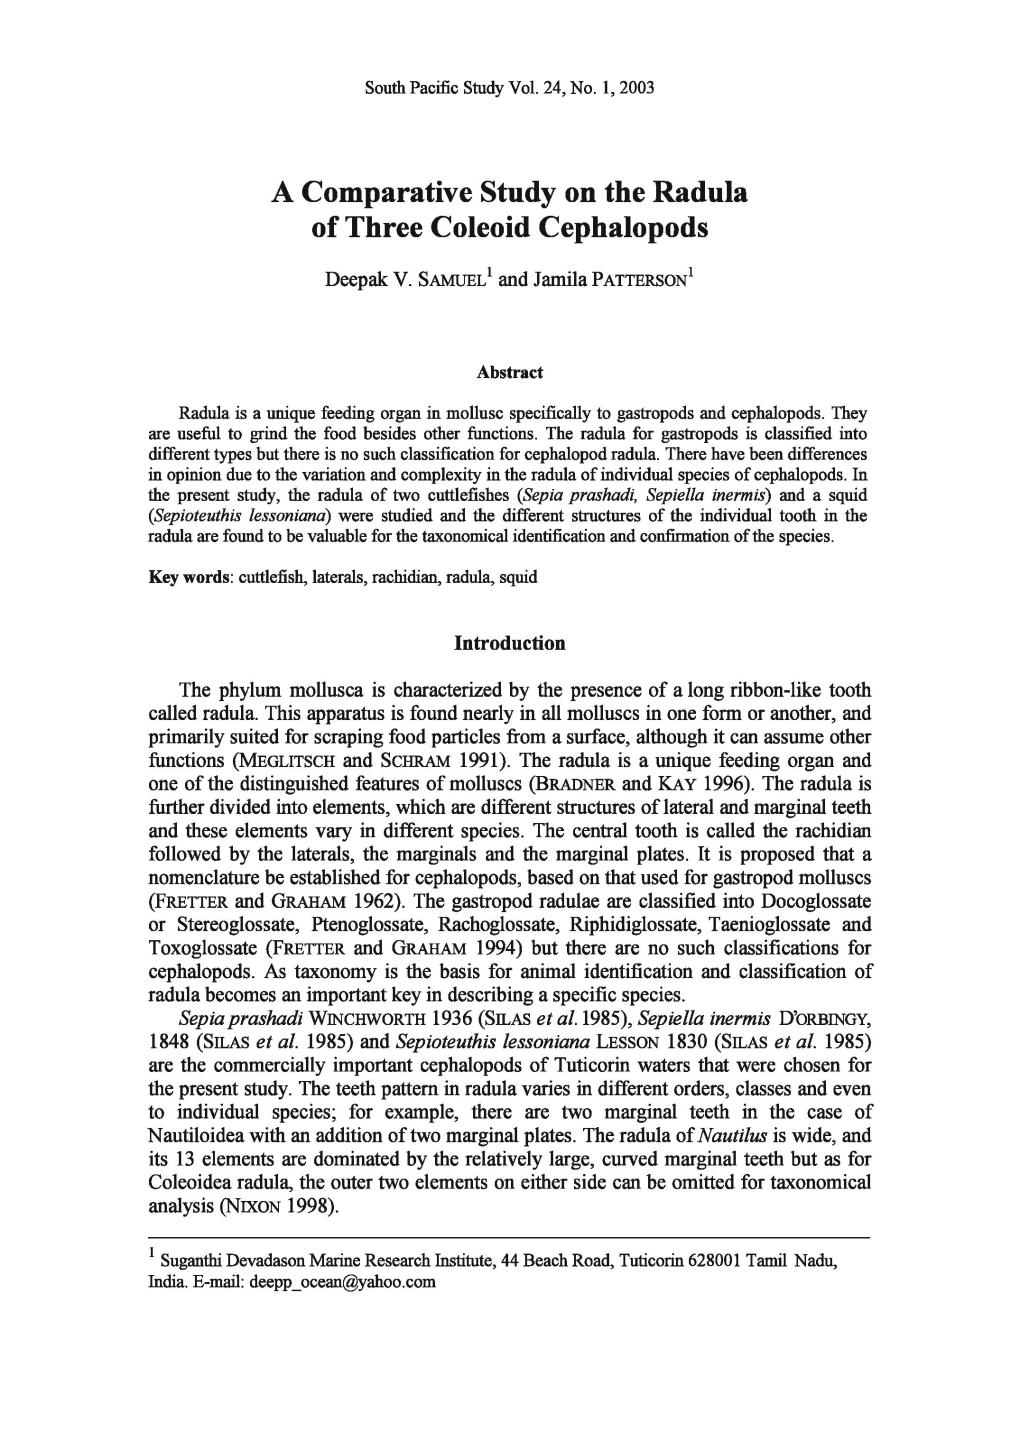 A Comparative Study on the Radula of Three Coleoid Cephalopods